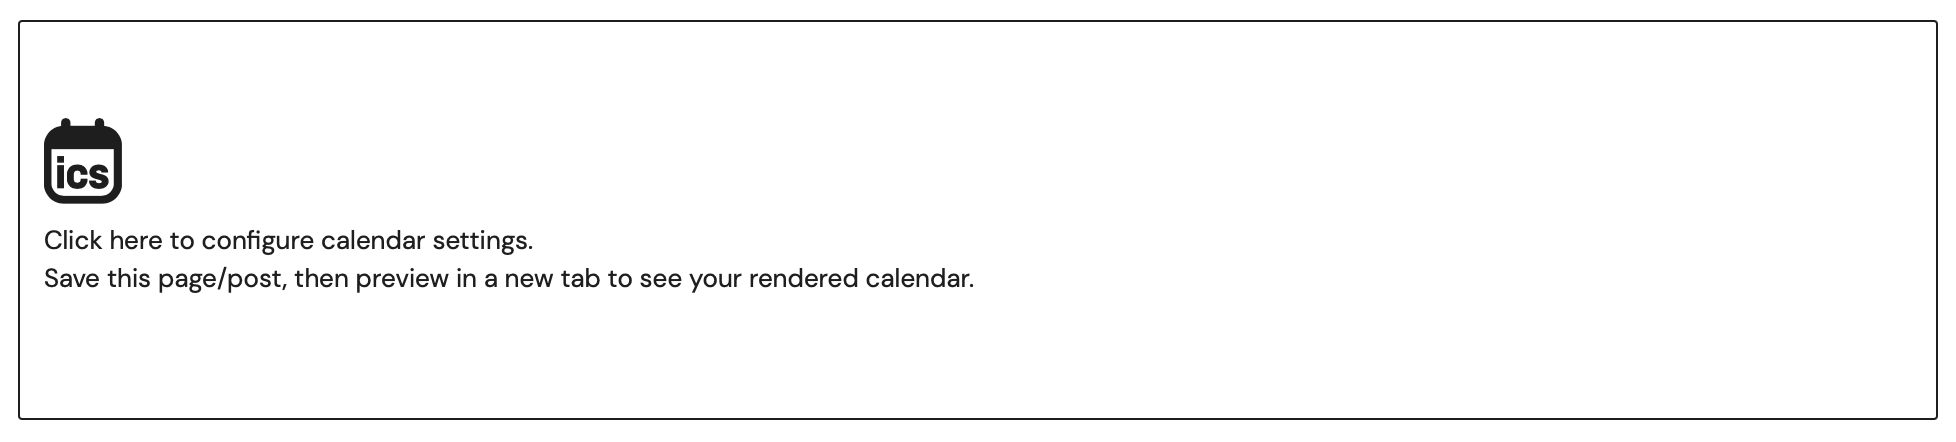 ICS Calendar Block Editor placeholder